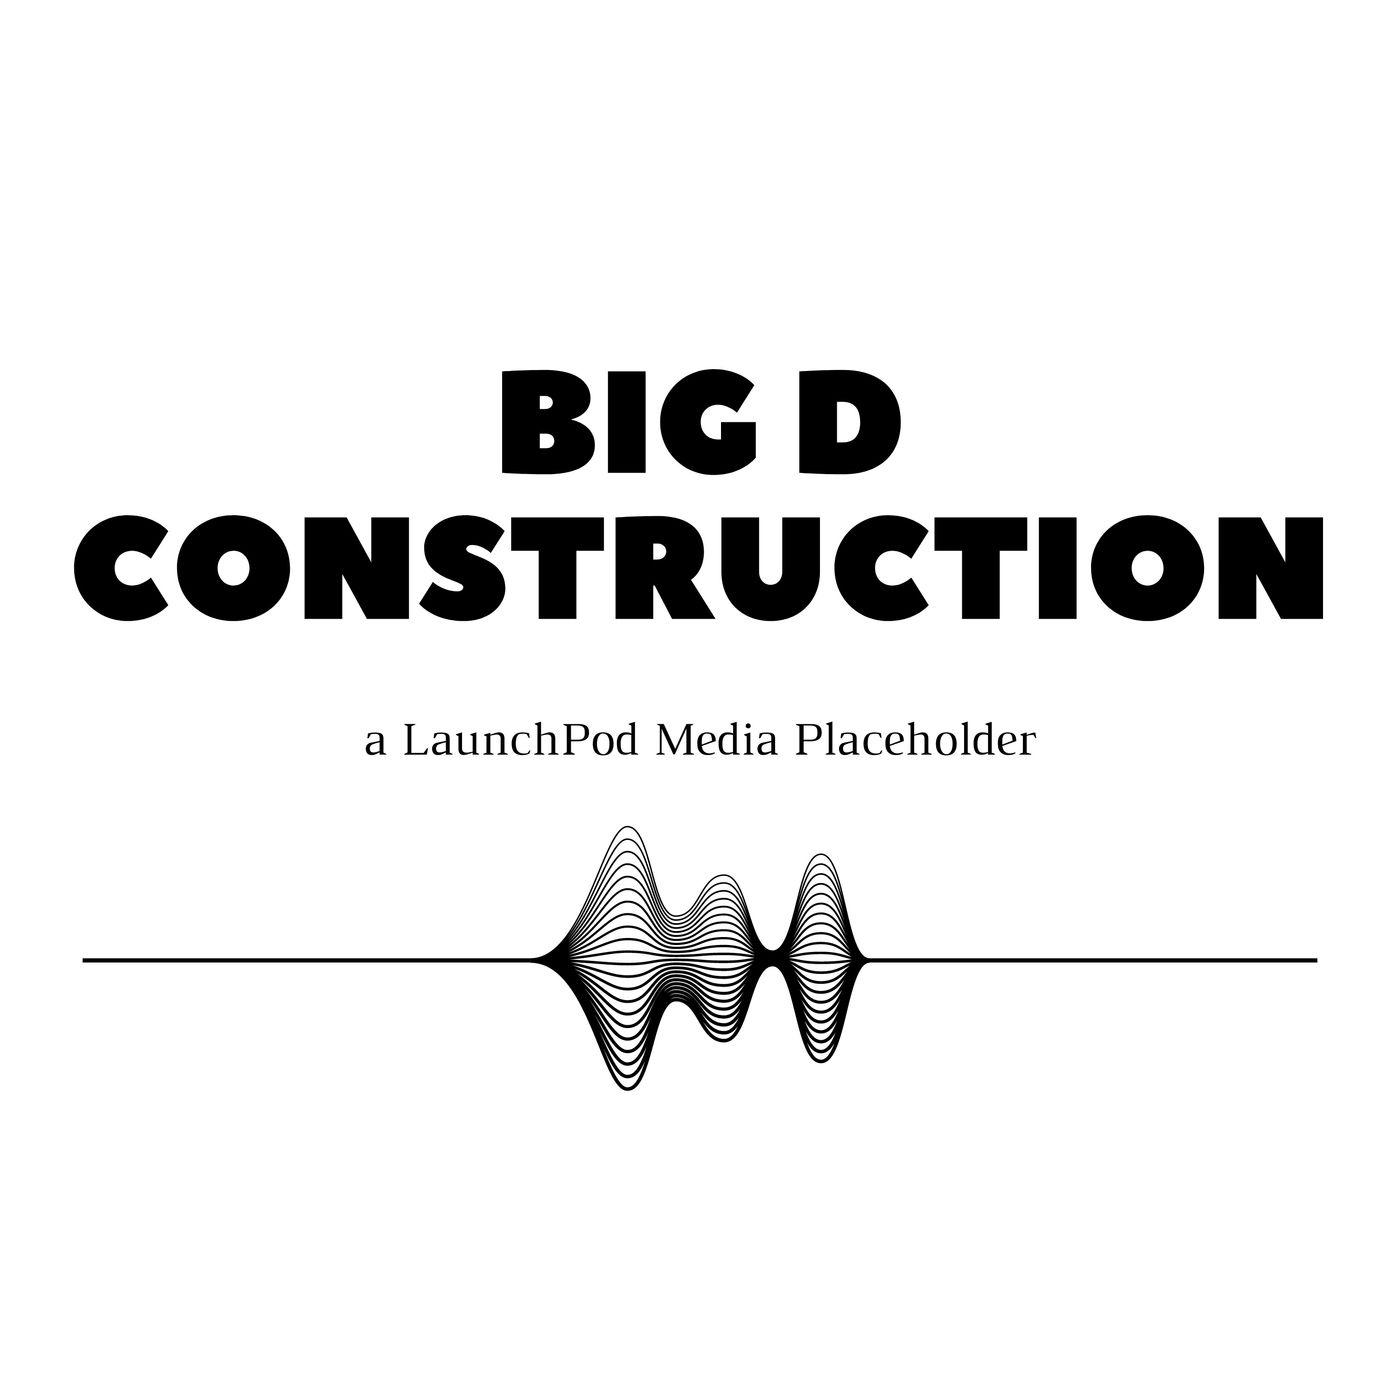 The BIG D CONSTRUCTION Podcast